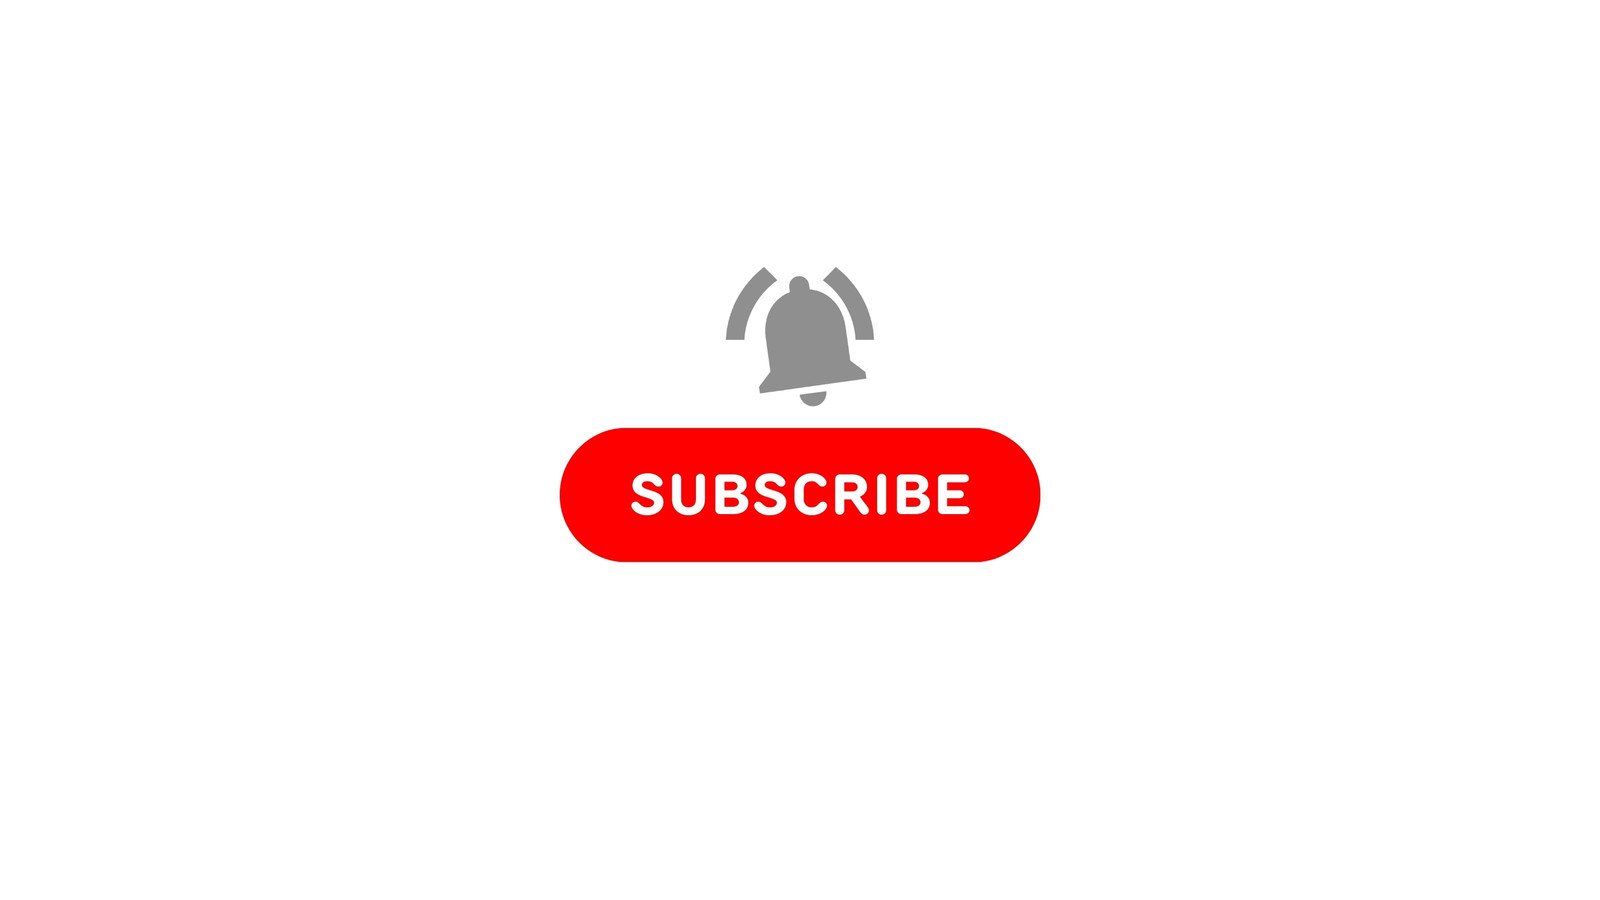 VSDC Tutorial: Subscribe Button Animation - YouTube